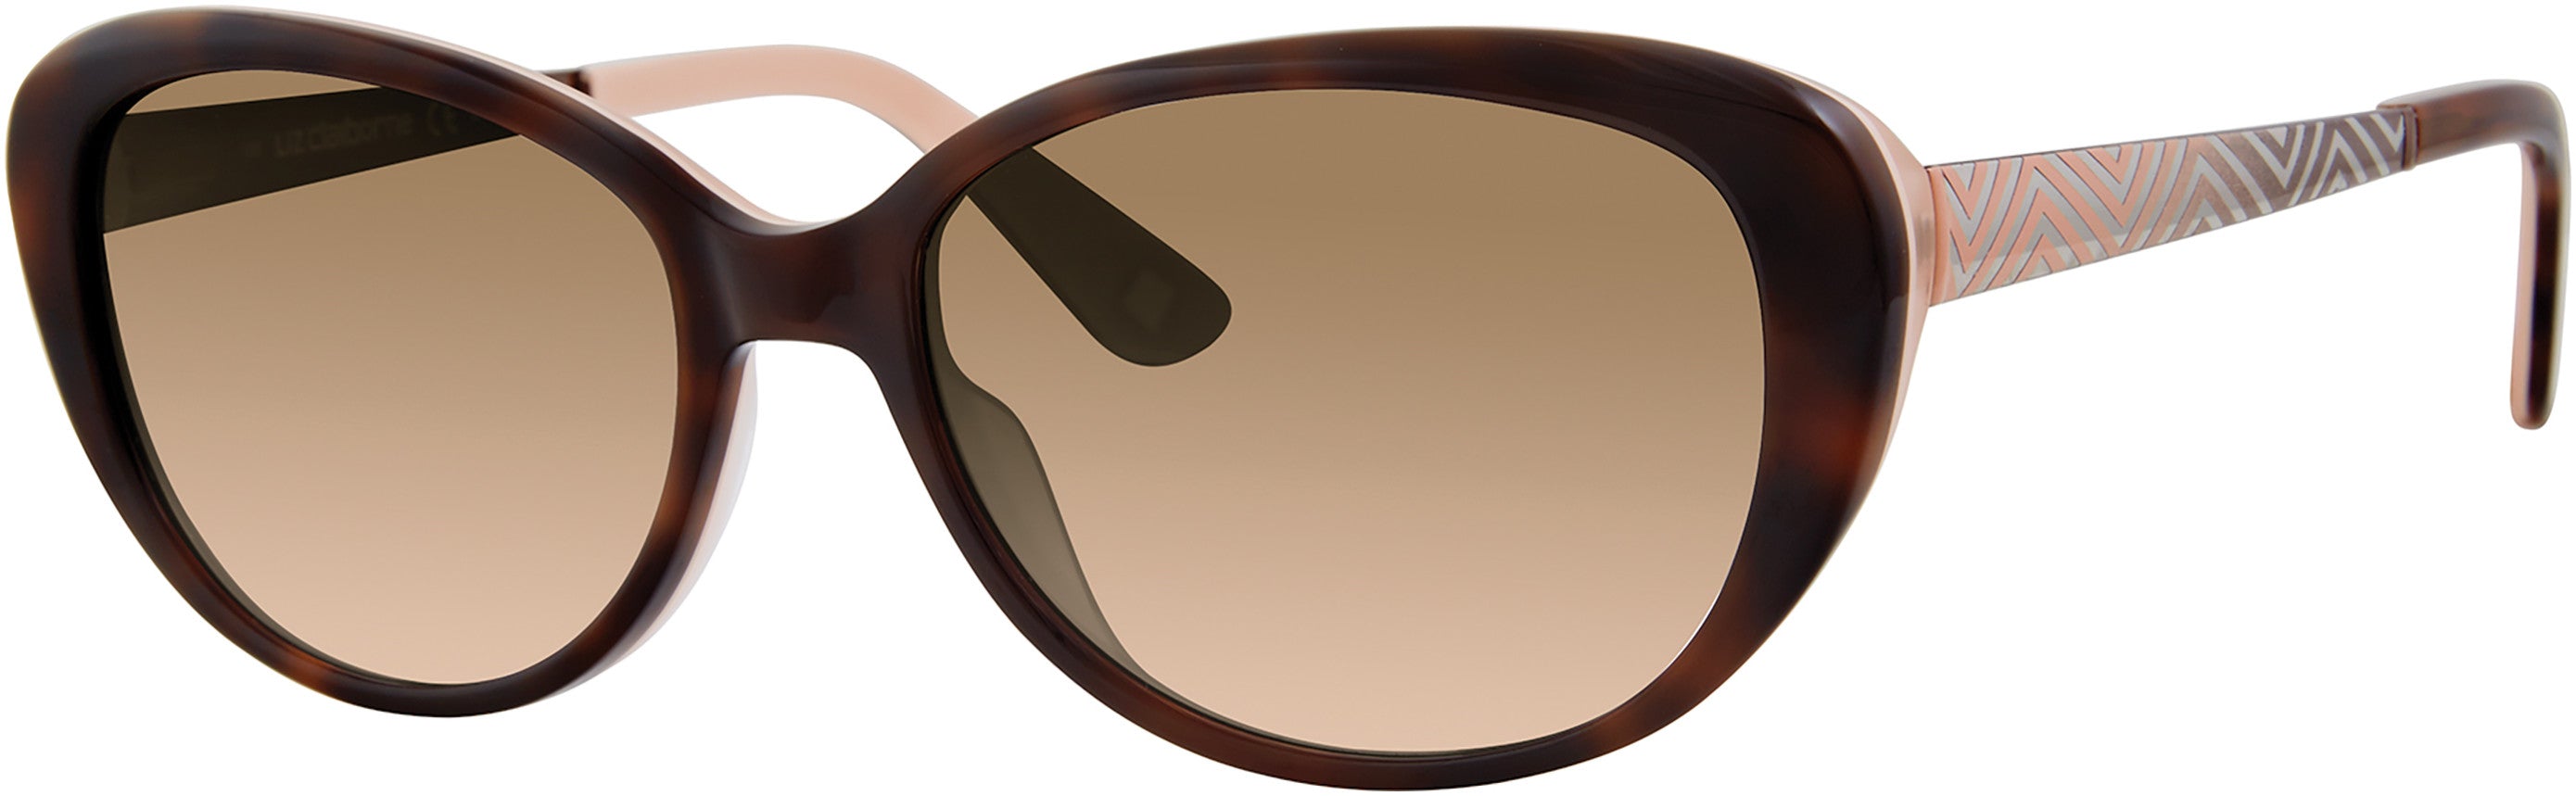  Liz Claiborne 571/S Oval Modified Sunglasses 0HMV-0HMV  Havana Peach (HA Brown Gradient)